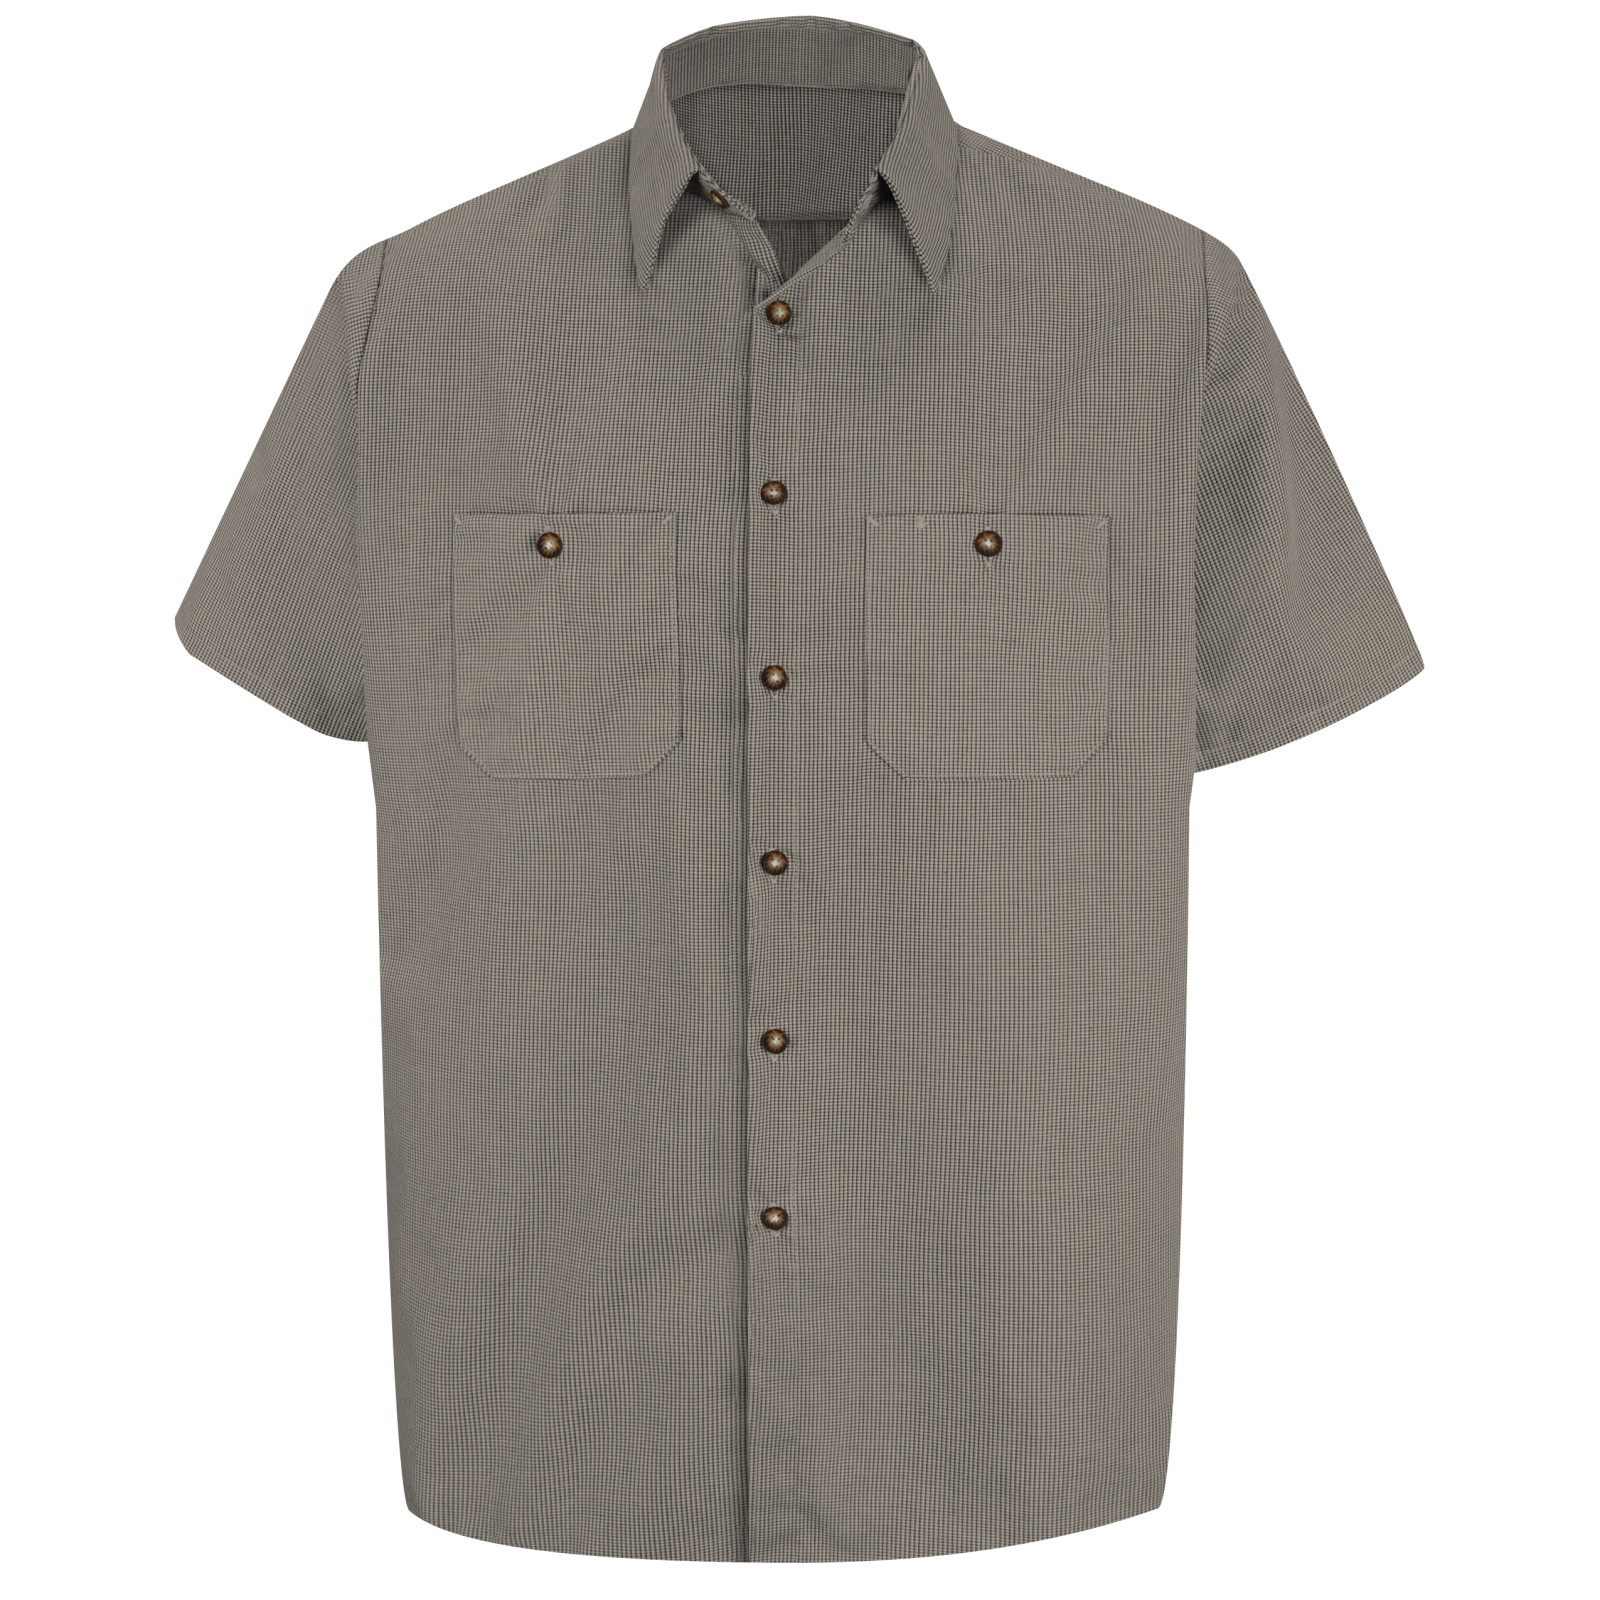 Mens shirt uniform small medium large XL blue gray green stripe white Cotton NEW 